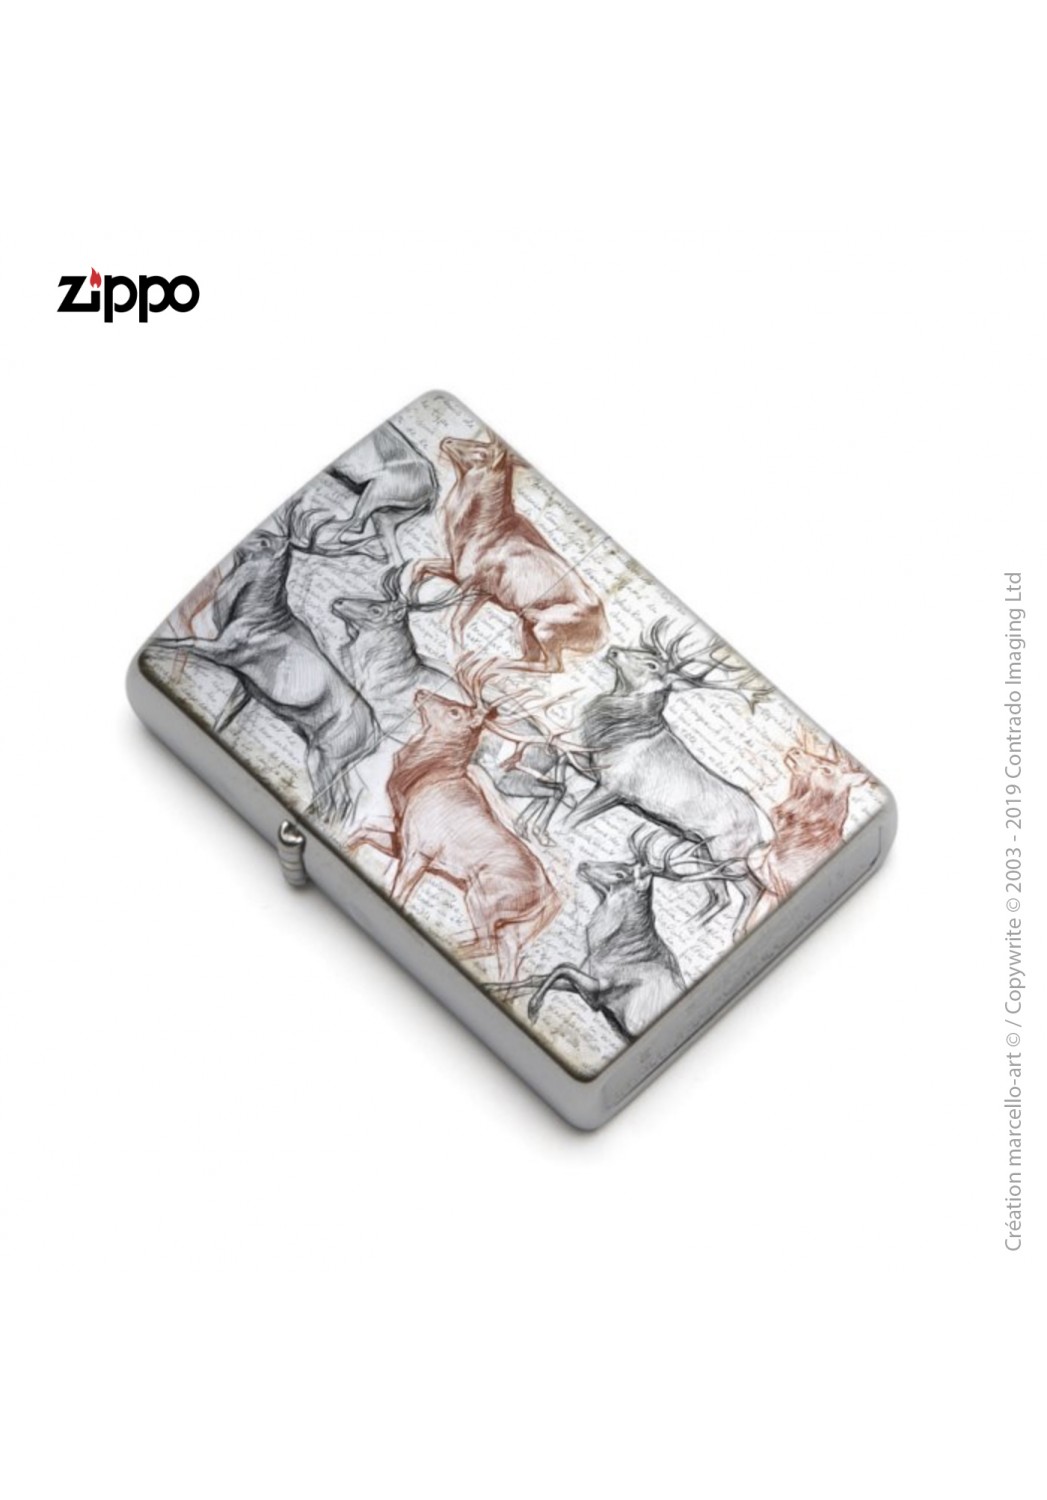 Marcello-art: Decoration accessoiries Zippo 297 The last herd